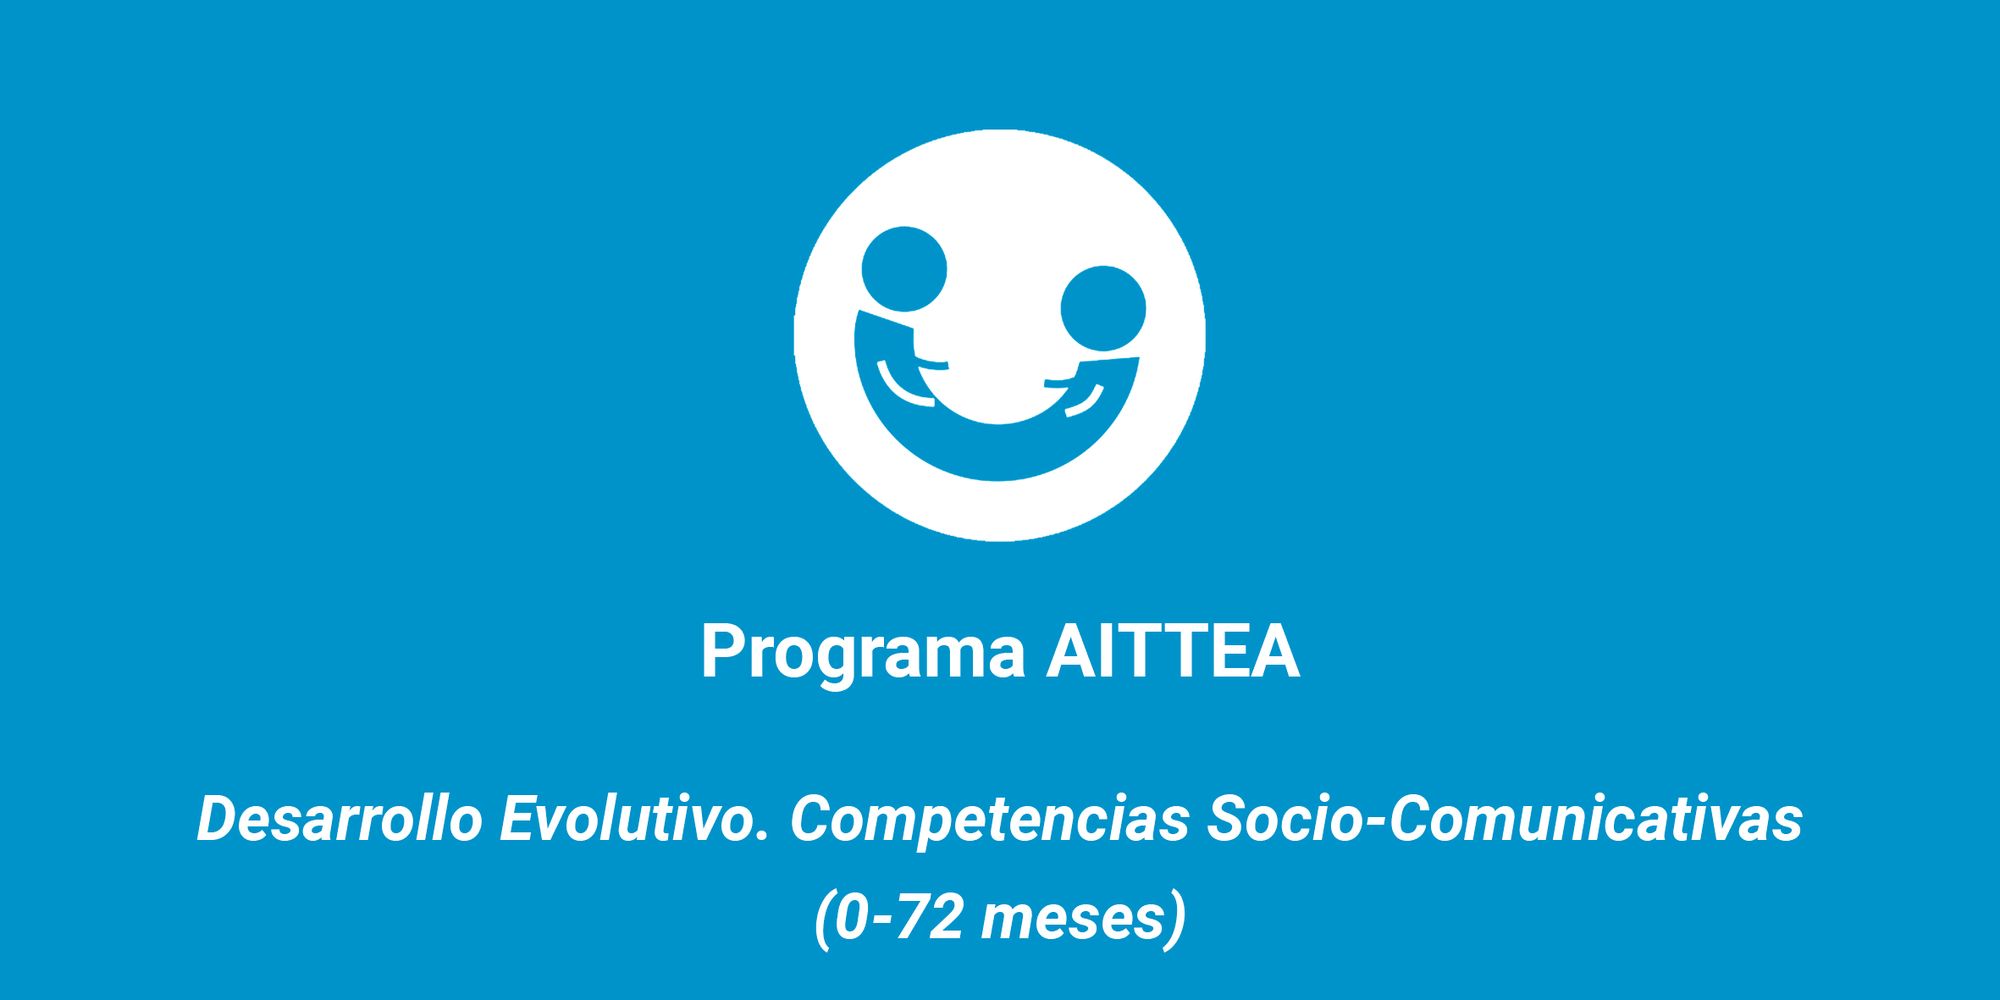 Desarrollo Evolutivo. Competencias Socio-Comunicativas (0-72 meses) (AITTEA)